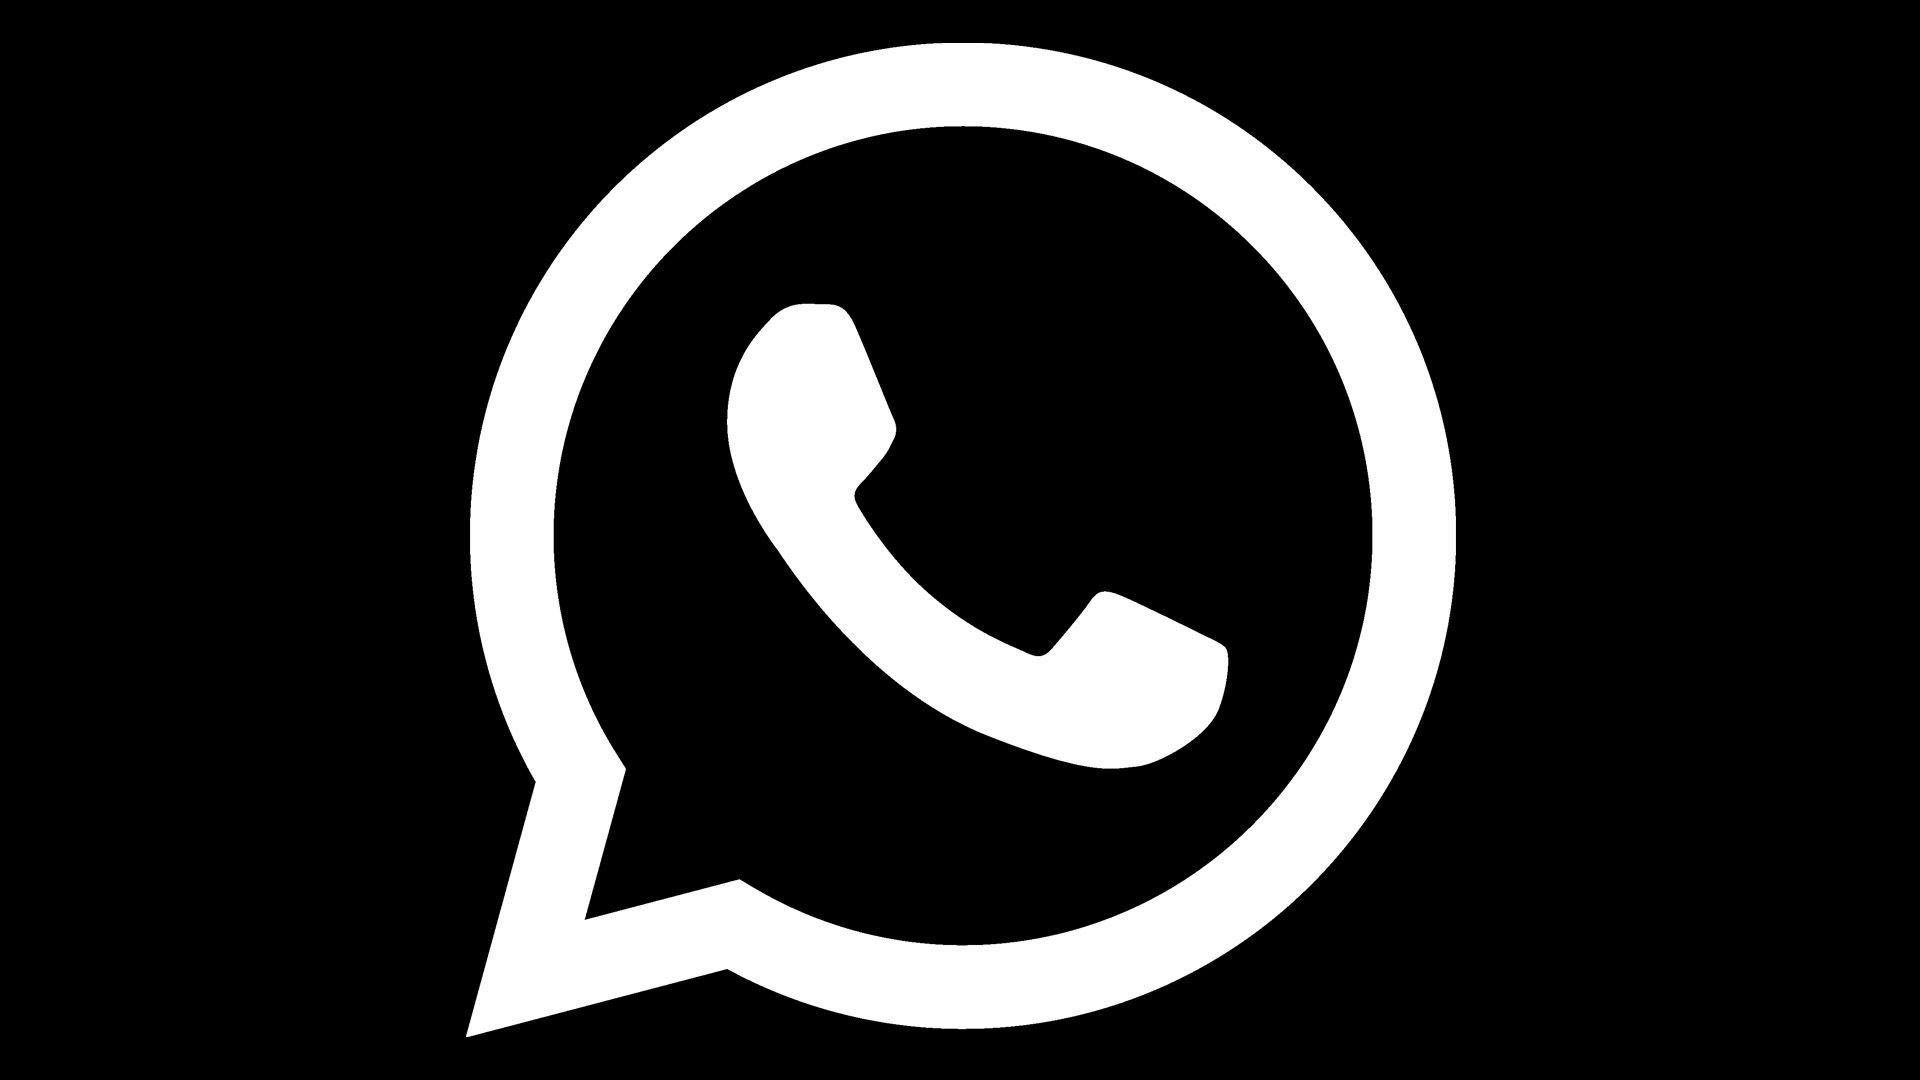 White Phone Logo - WhatsApp Logo, symbol meaning, History and Evolution